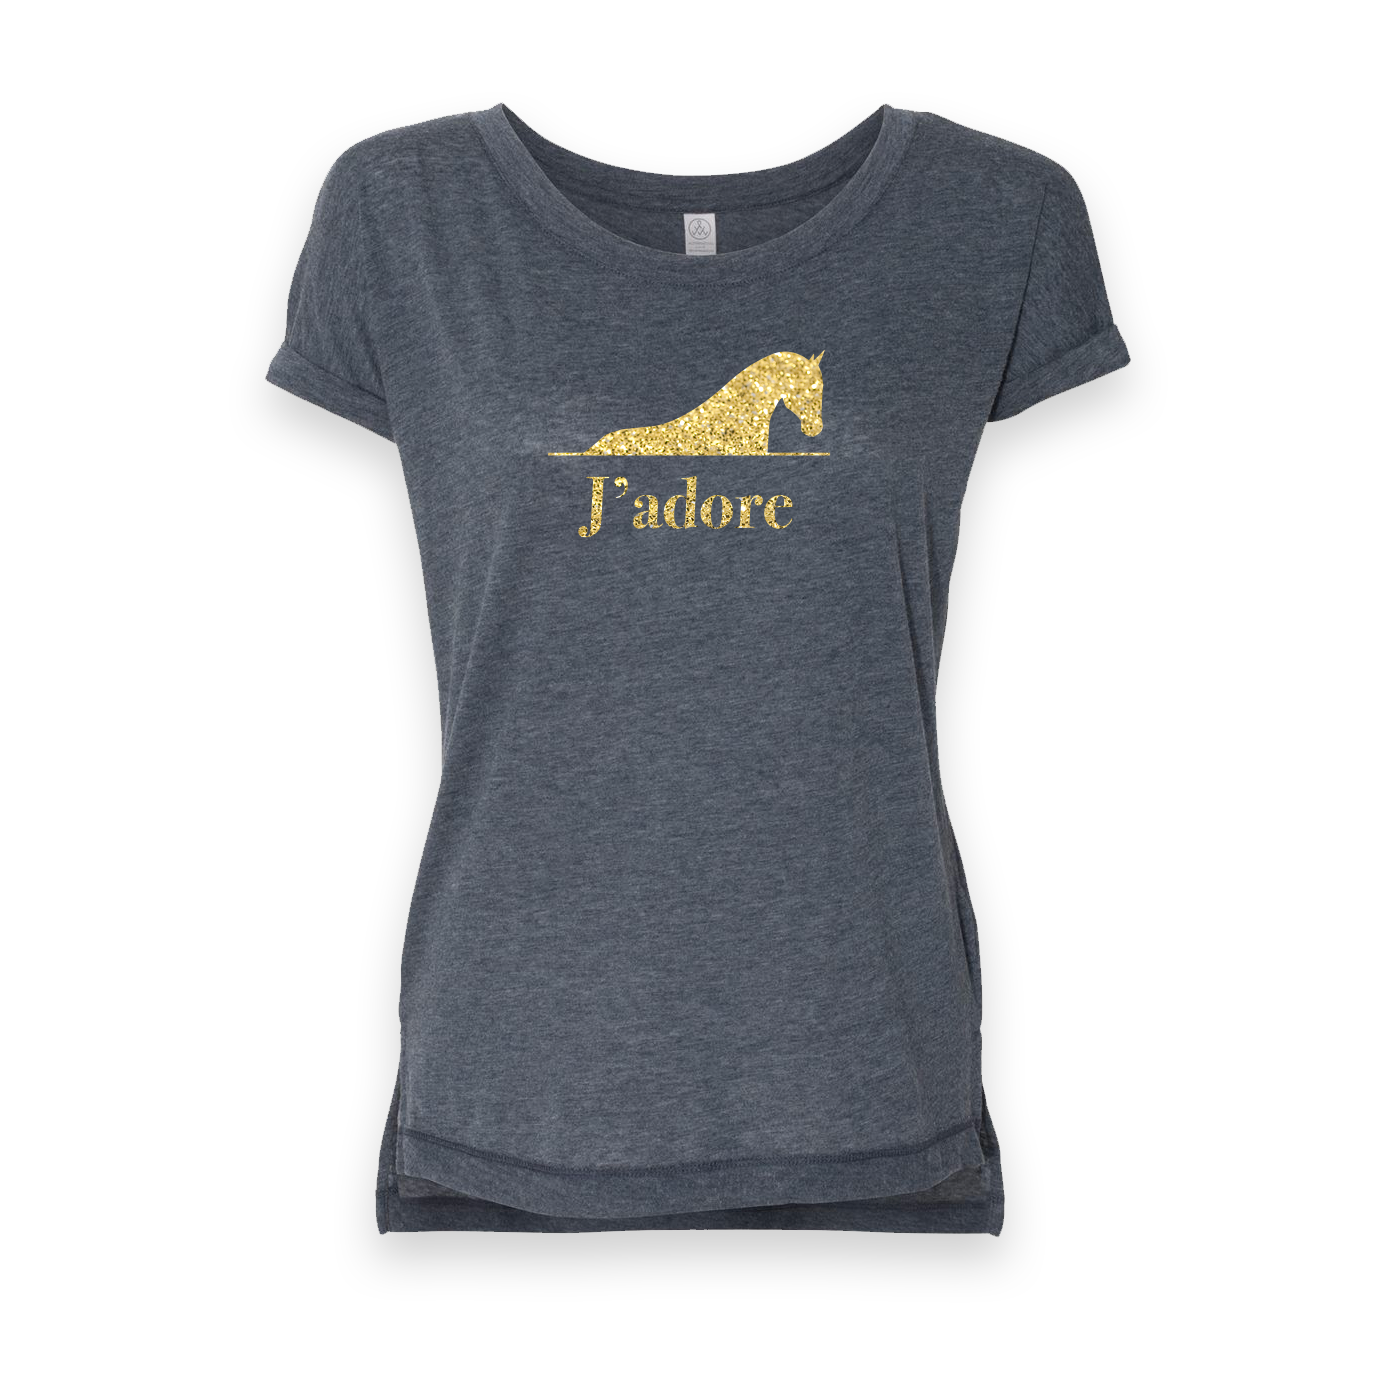 Retiring J'adore - Gold Glitter Print - T-shirt Women's - Tidal Blue